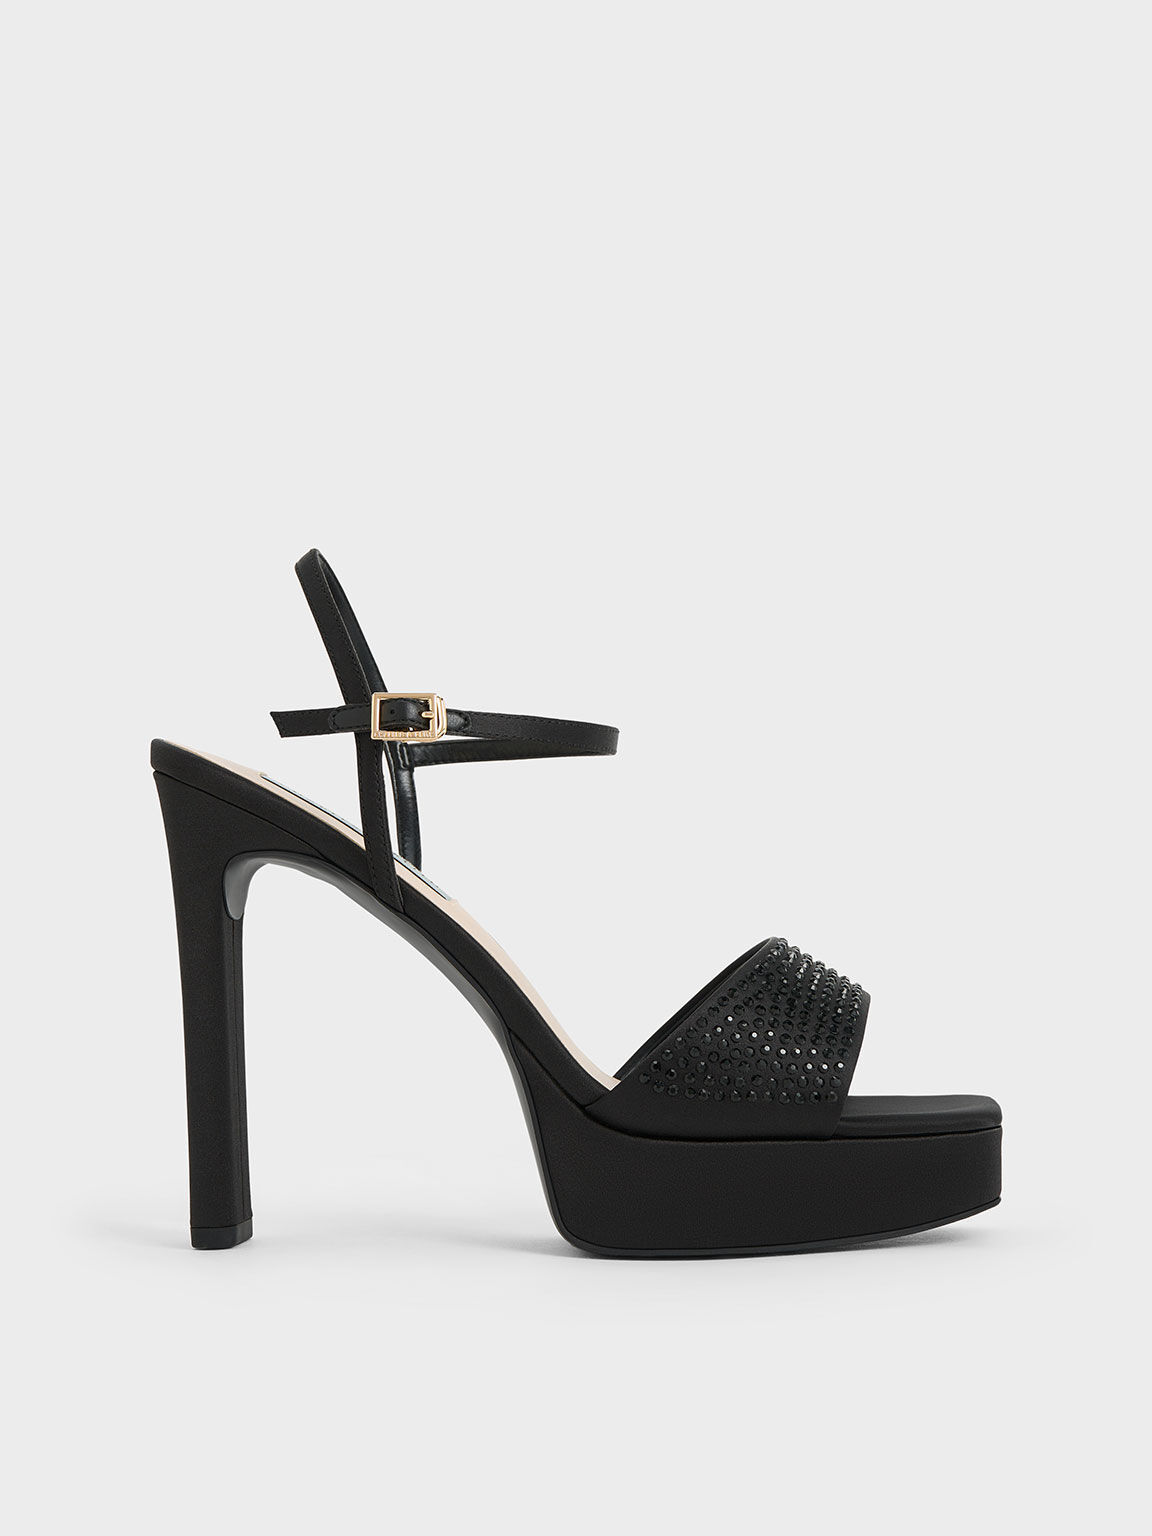 Buy mid heels sandals ▷ Bernan. Audley Shoes Official Online Shop